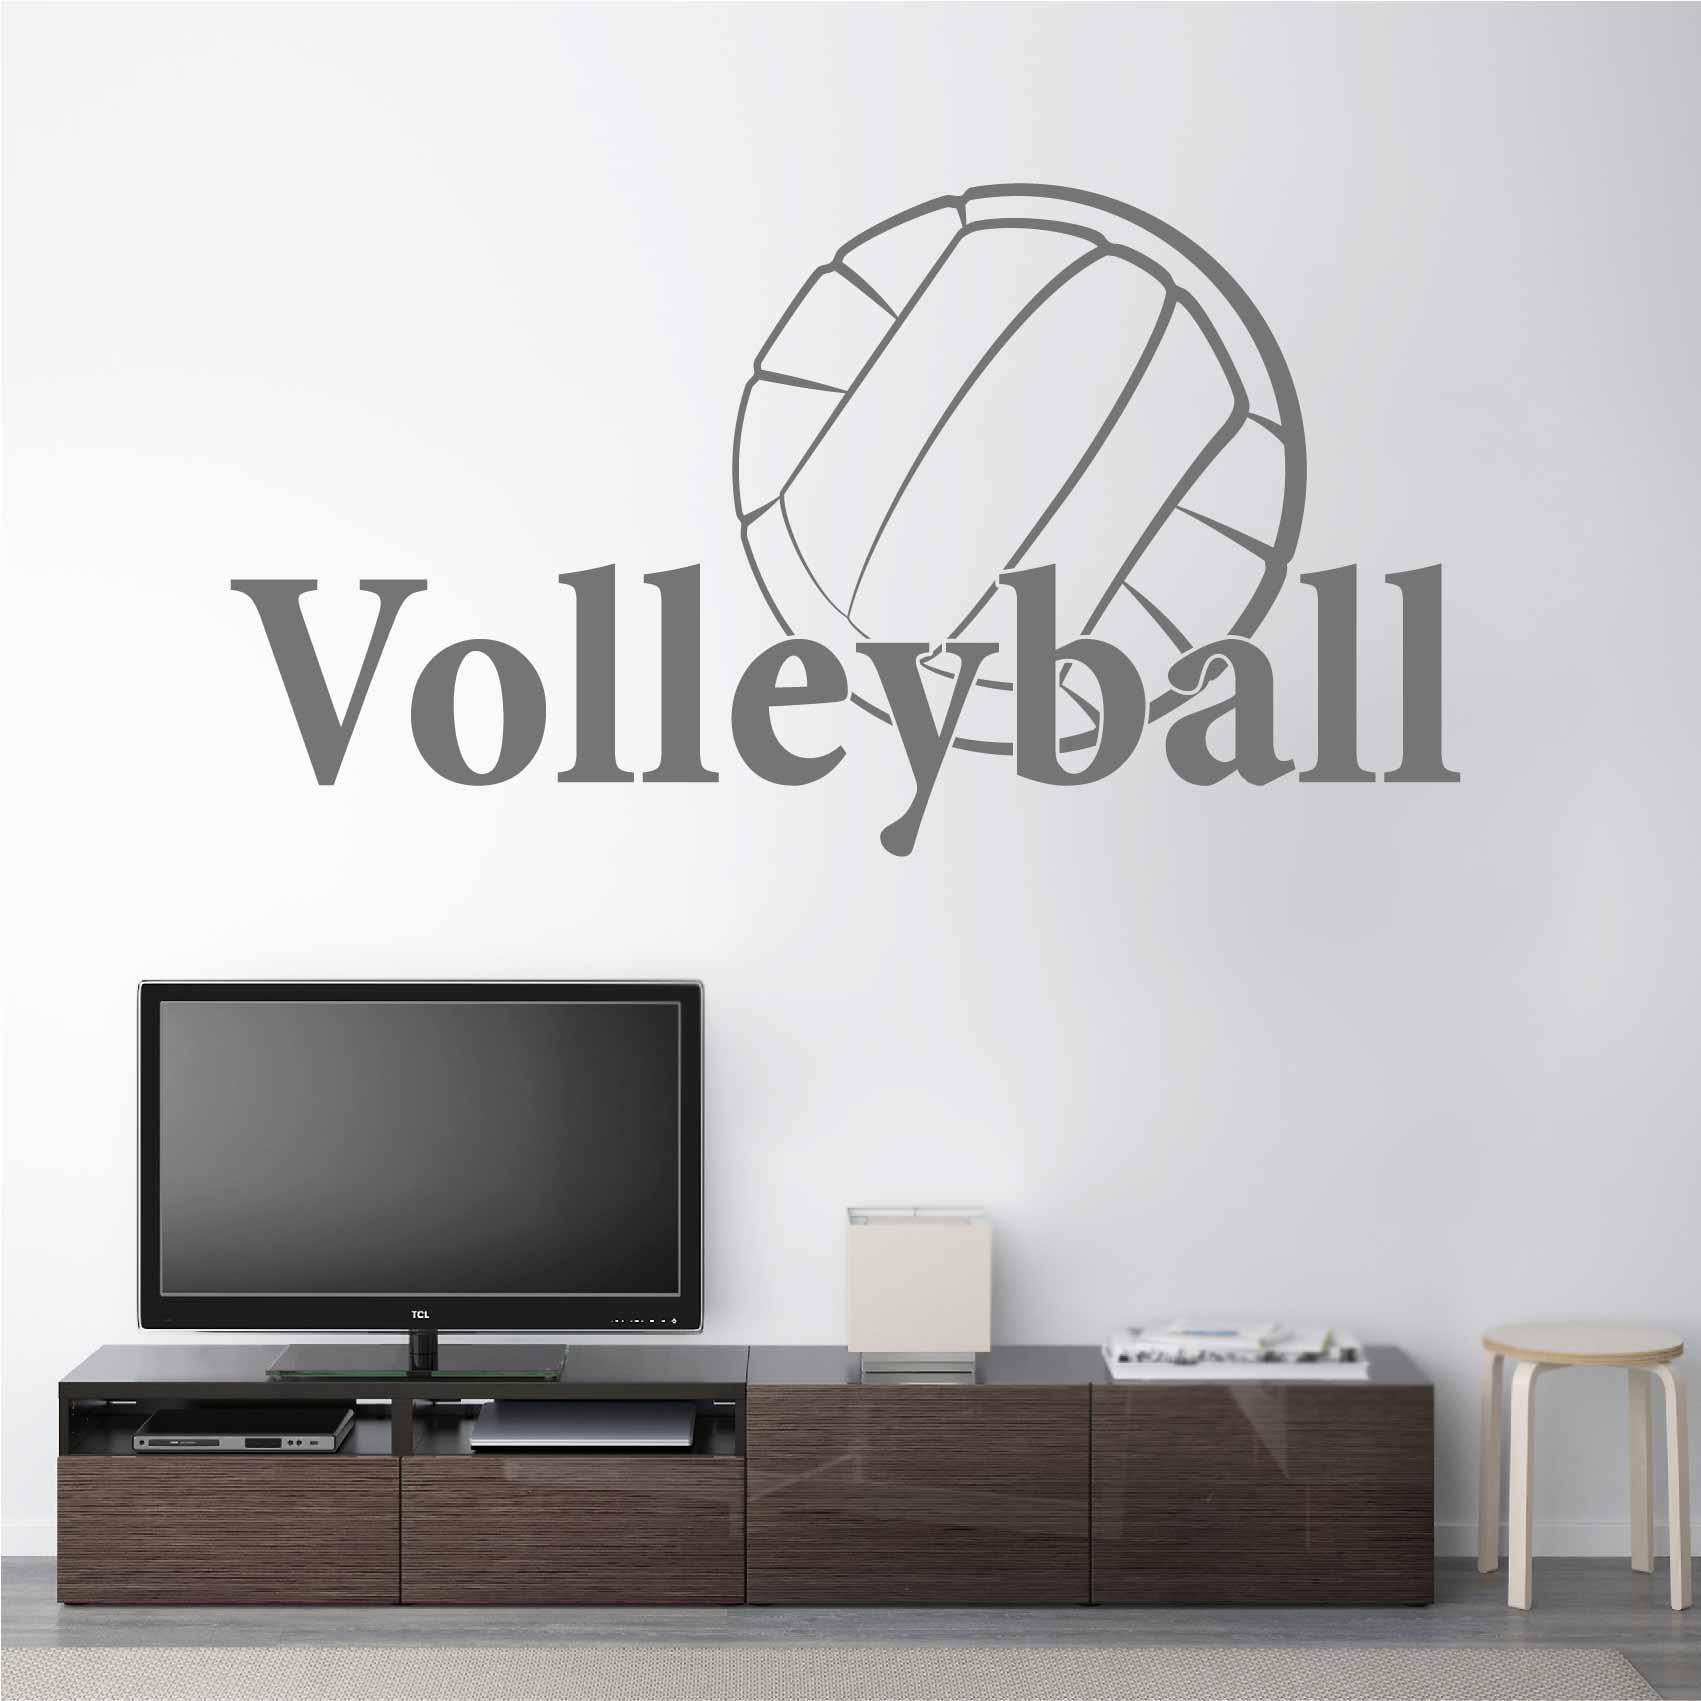 stickers-mural-volleyball-ref6sport-stickers-muraux-volley-autocollant-volleyball-deco-chambre-enfant-salon-sticker-mural-sport